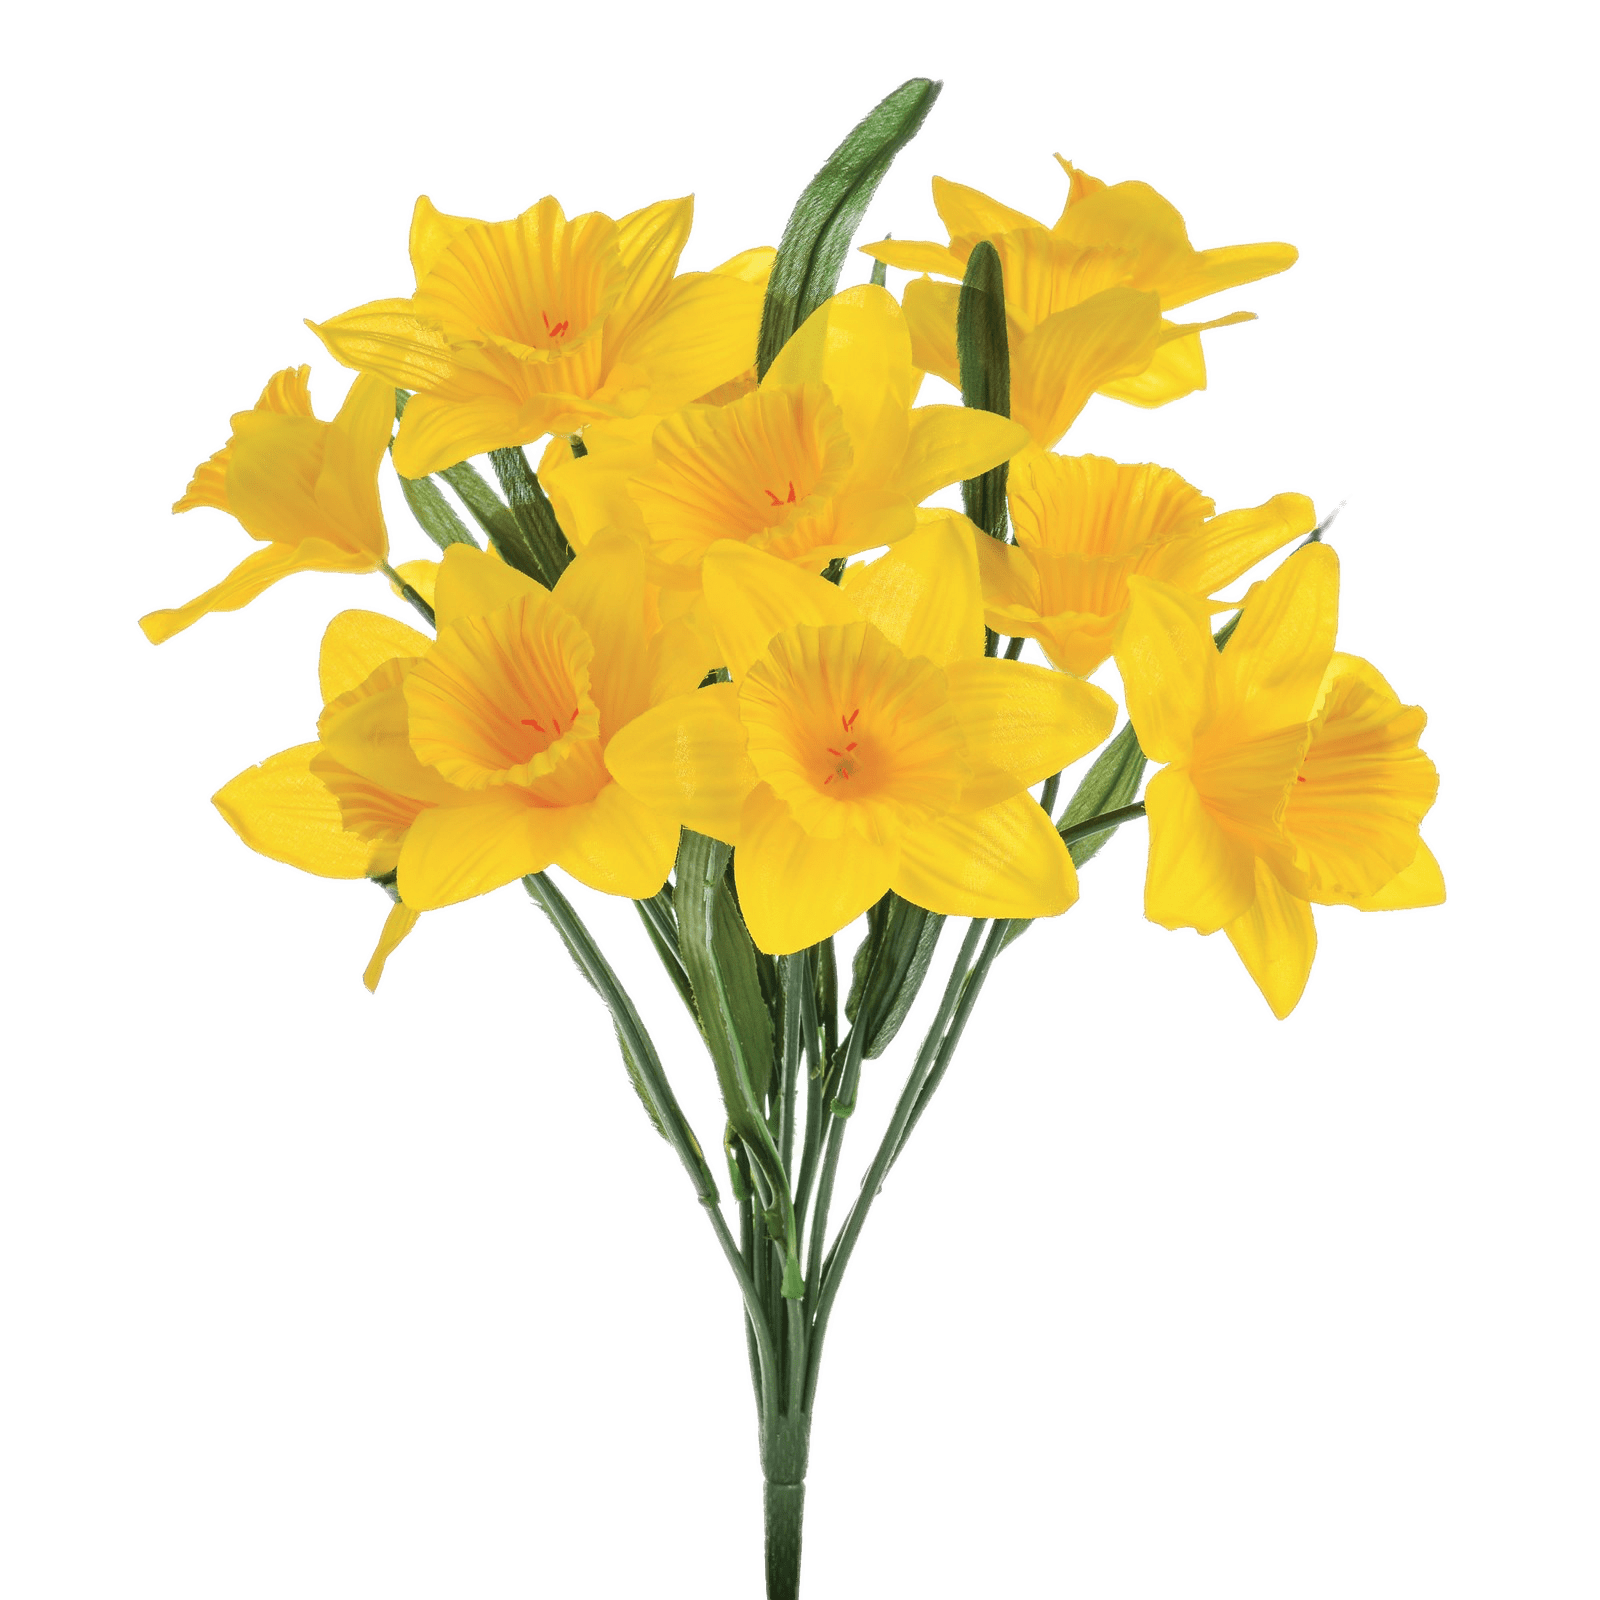 Daffodil Bunch PNG HD Quality